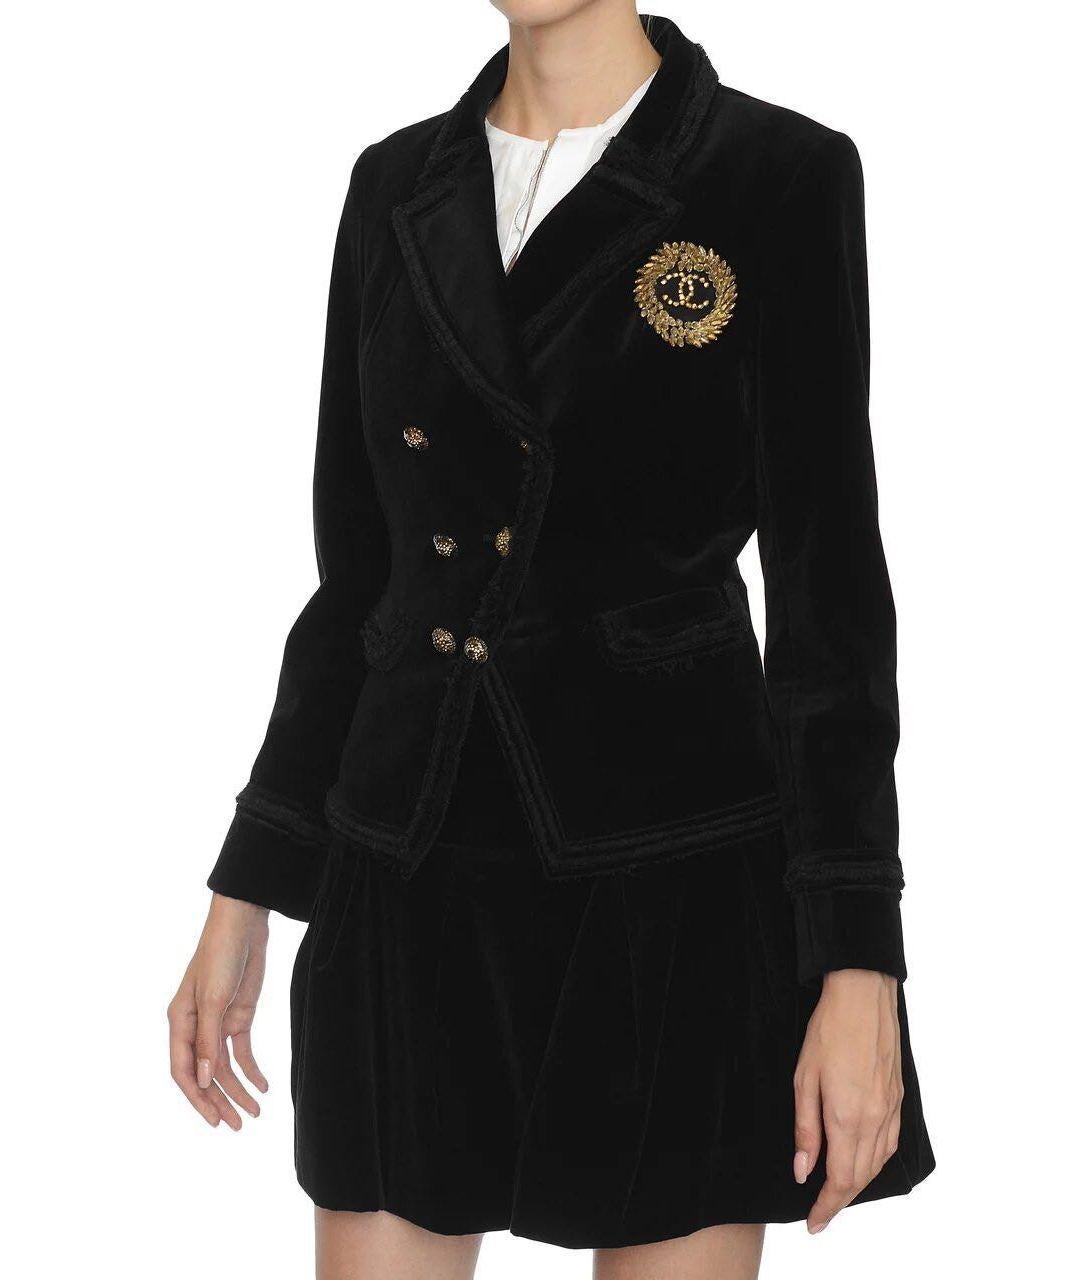 Iconic 2010 velvet Chanel blazer jacket with a beaded 